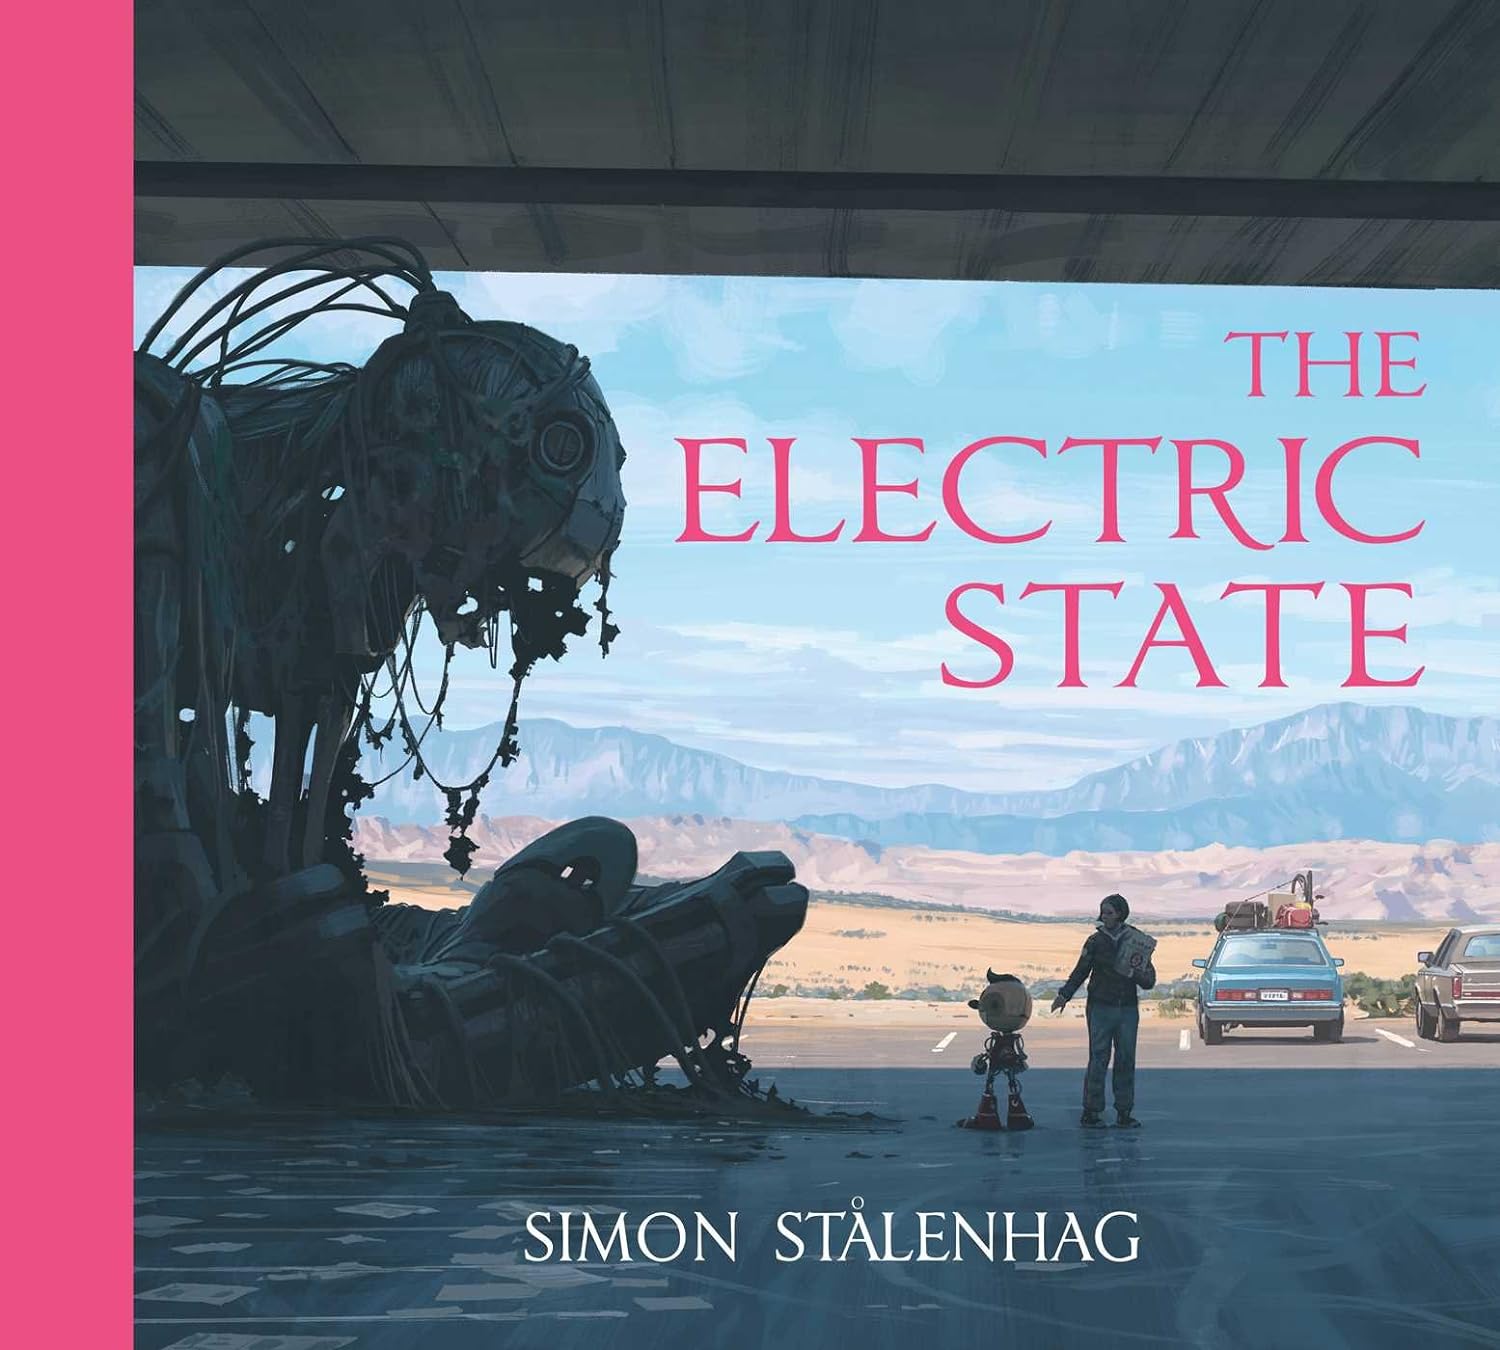 Book- Simon Stålenhag The Electric State Hardcover